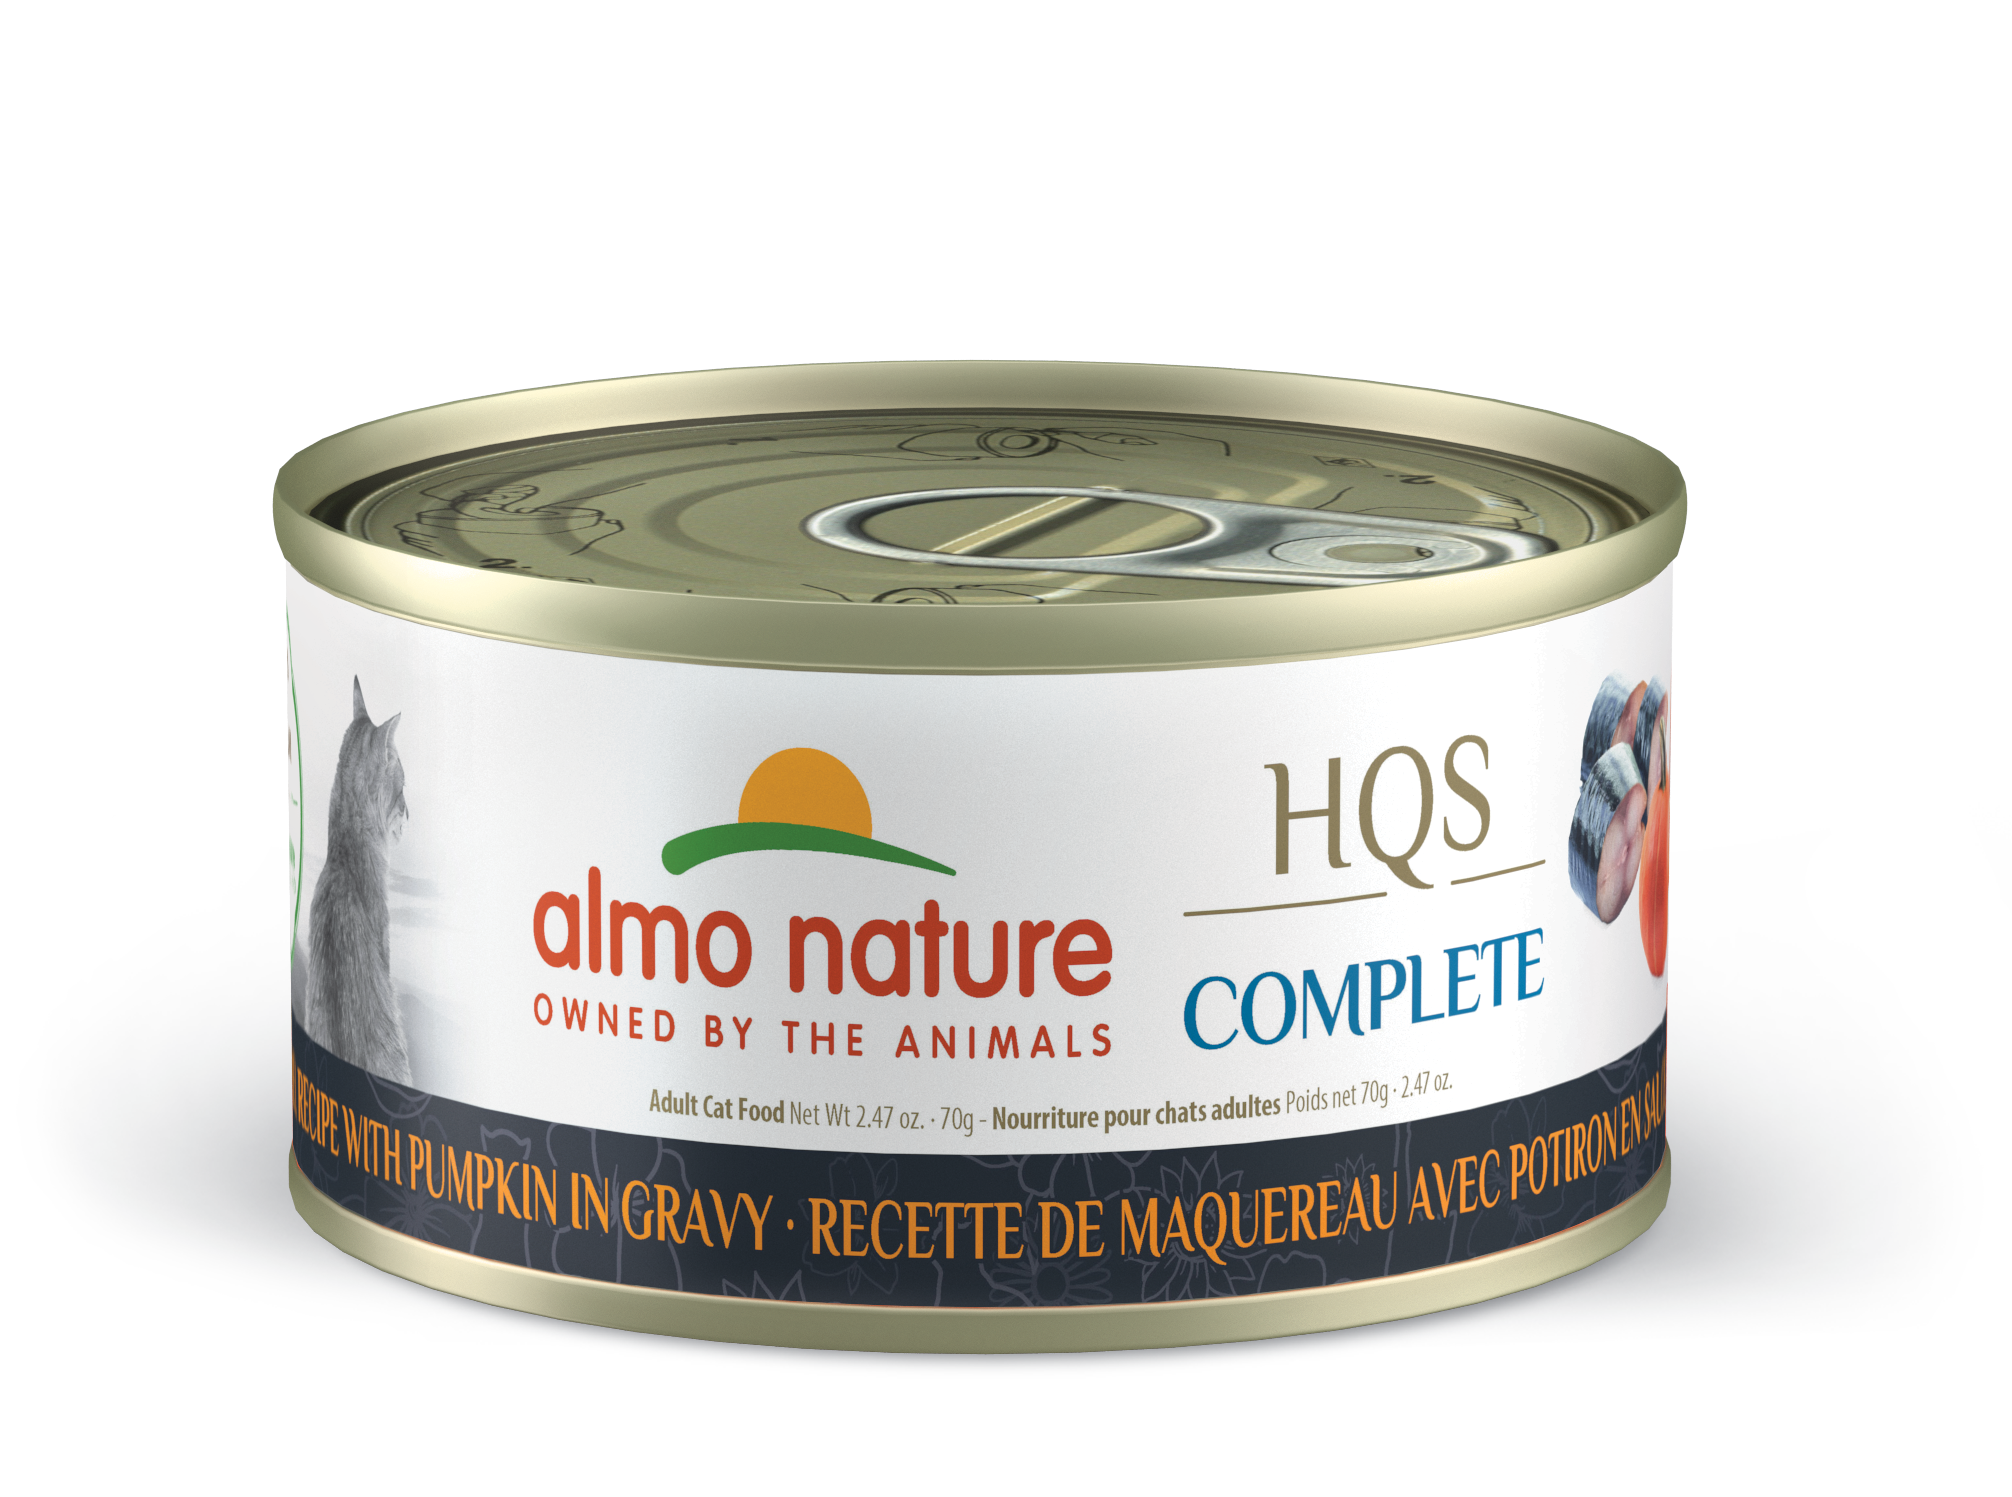 Almo Nature - HQS Complete Mackerel Recipe with Pumpkin in Gravy (Wet Cat Food)